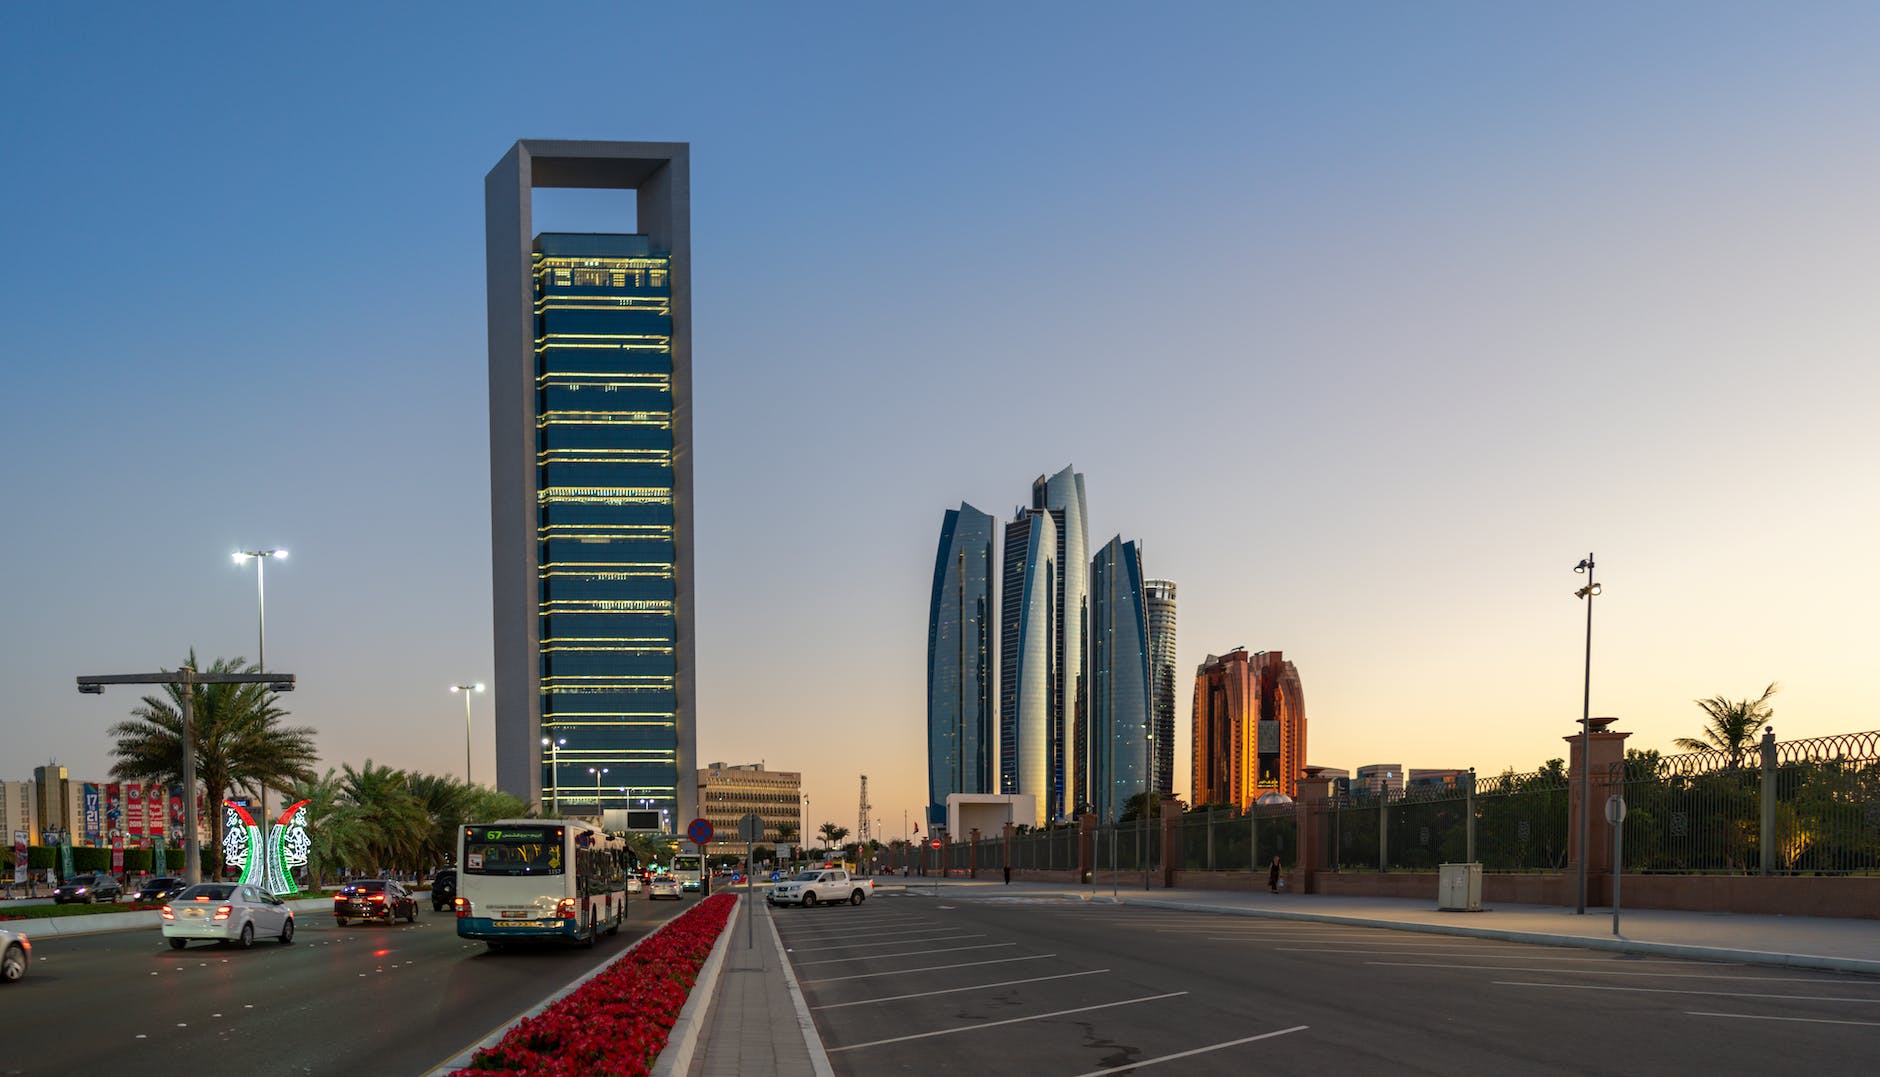 The Abu Dhabi National Oil Company (ADNOC)